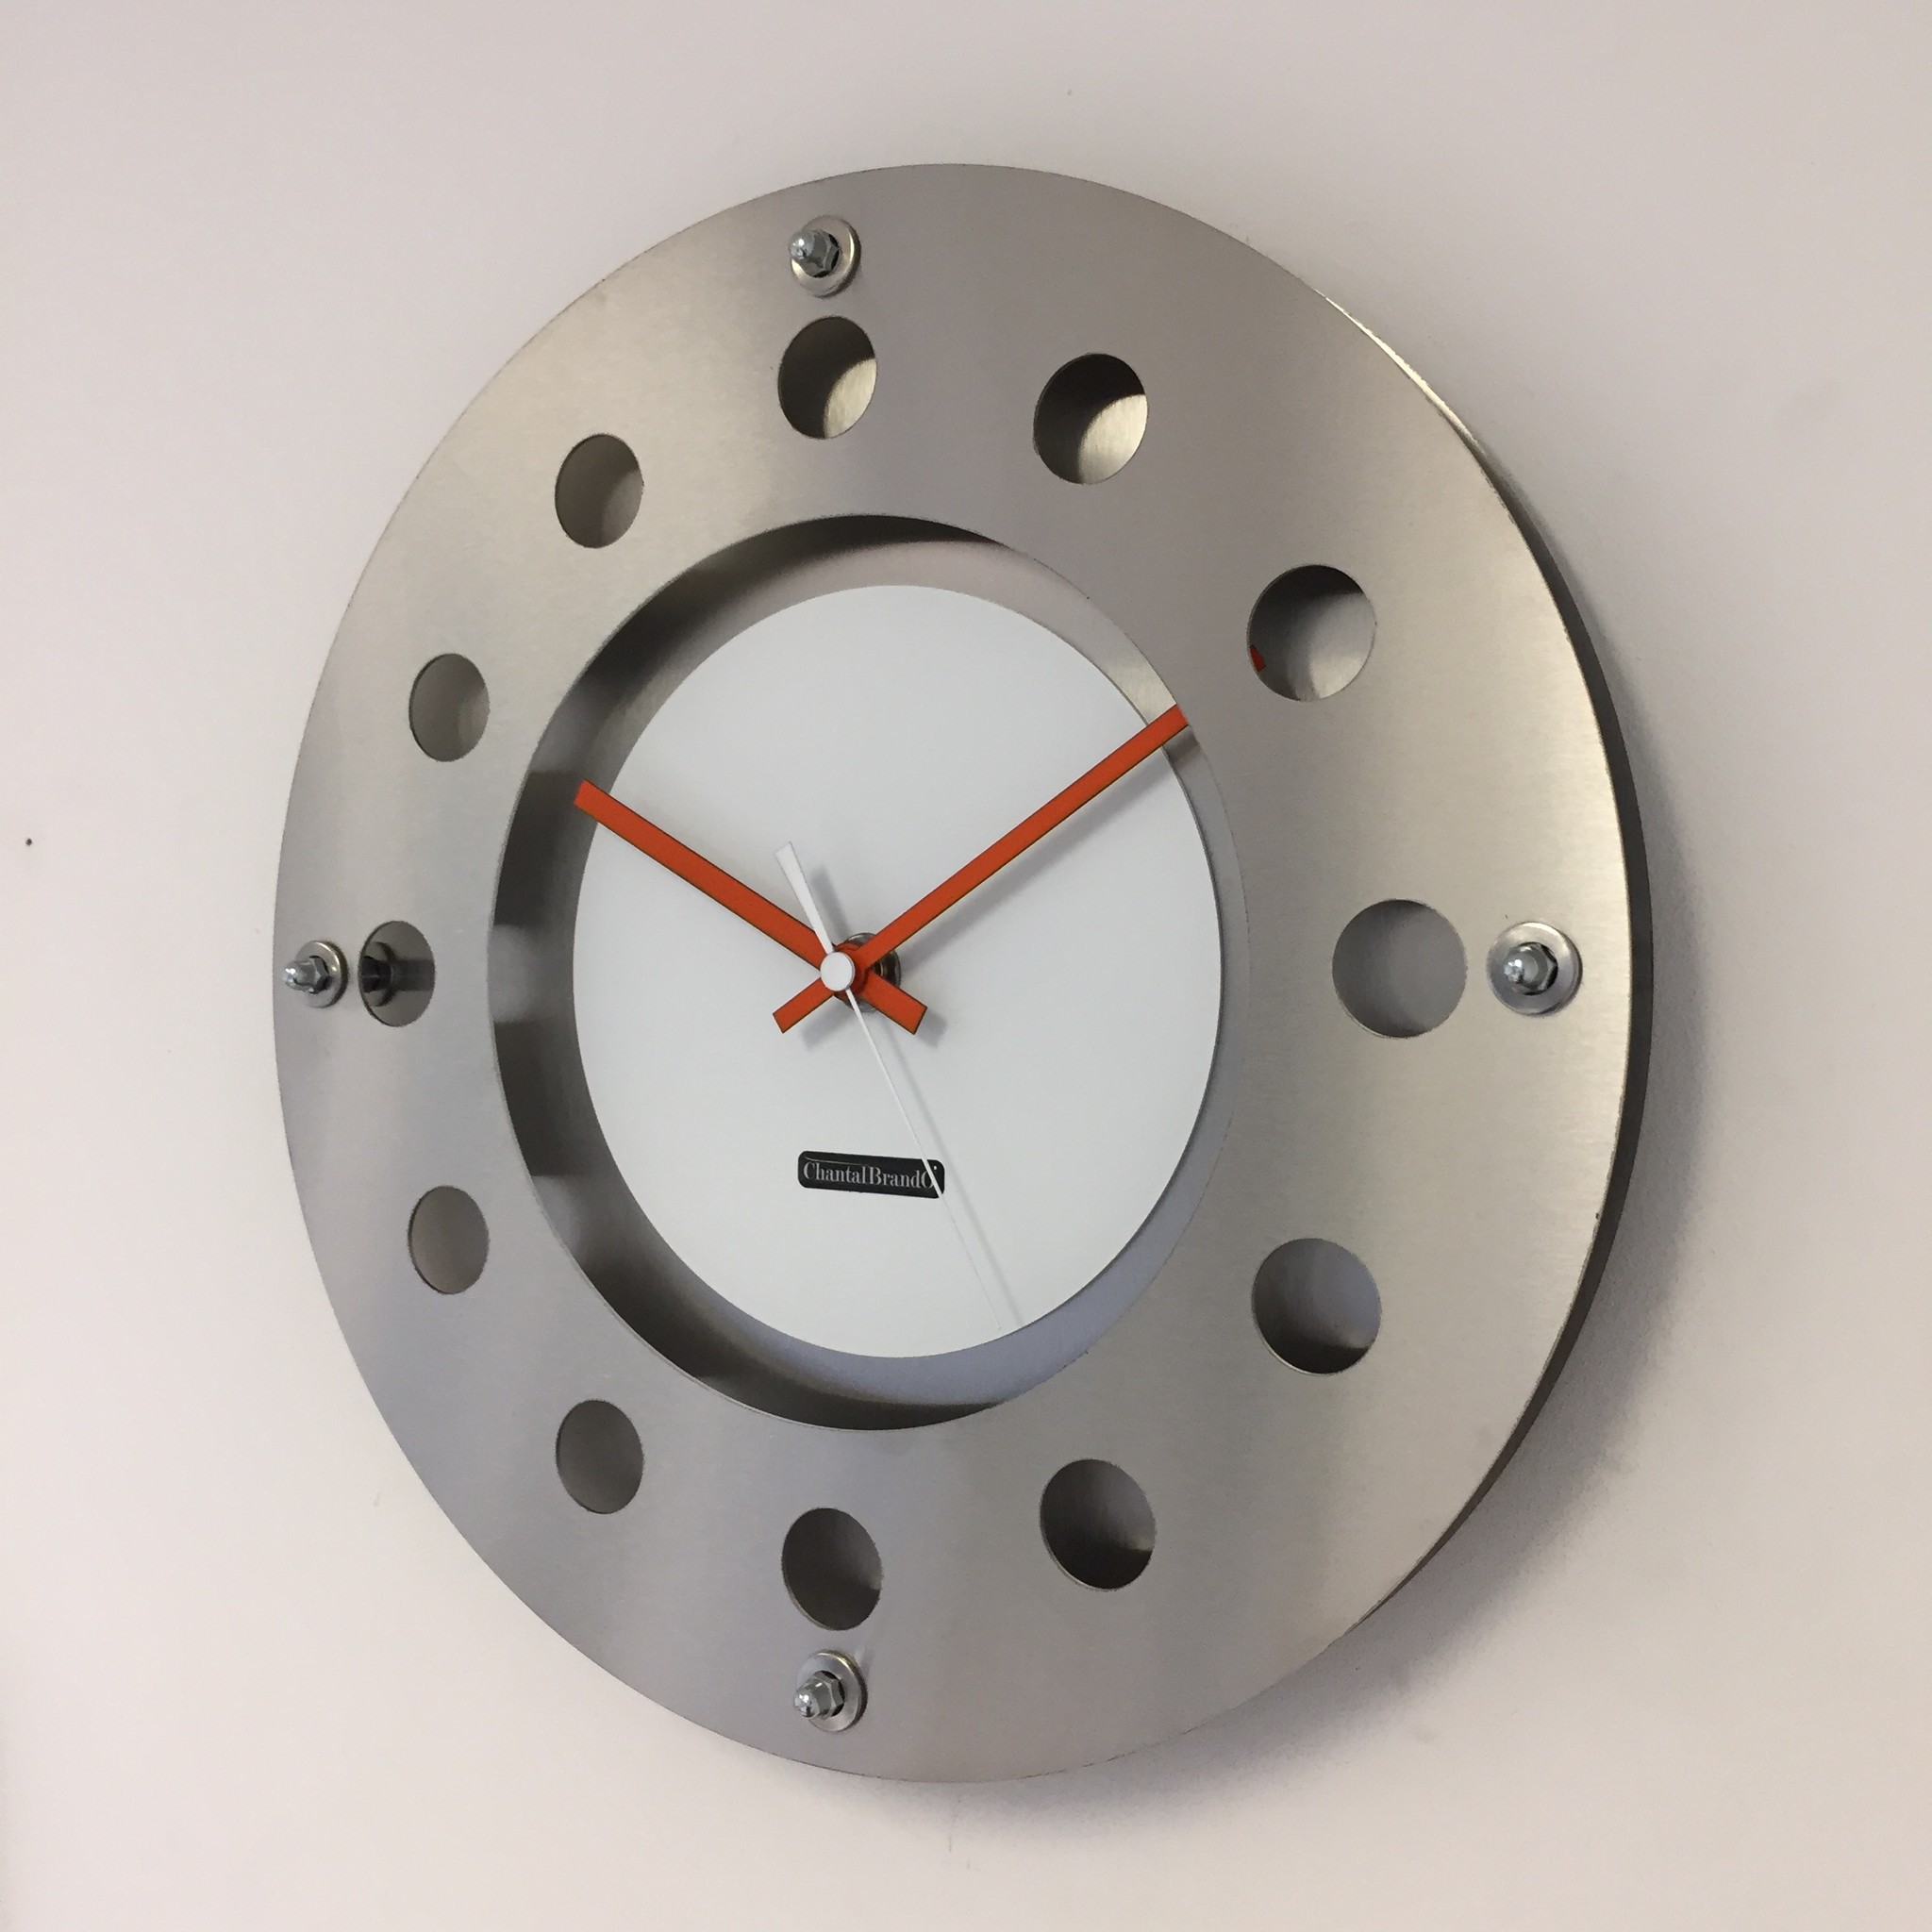 ChantalBrandO Design - Wall clock Mecanica Small Indoor Circle White Orange White Modern Dutch Design Handmade 40 cm